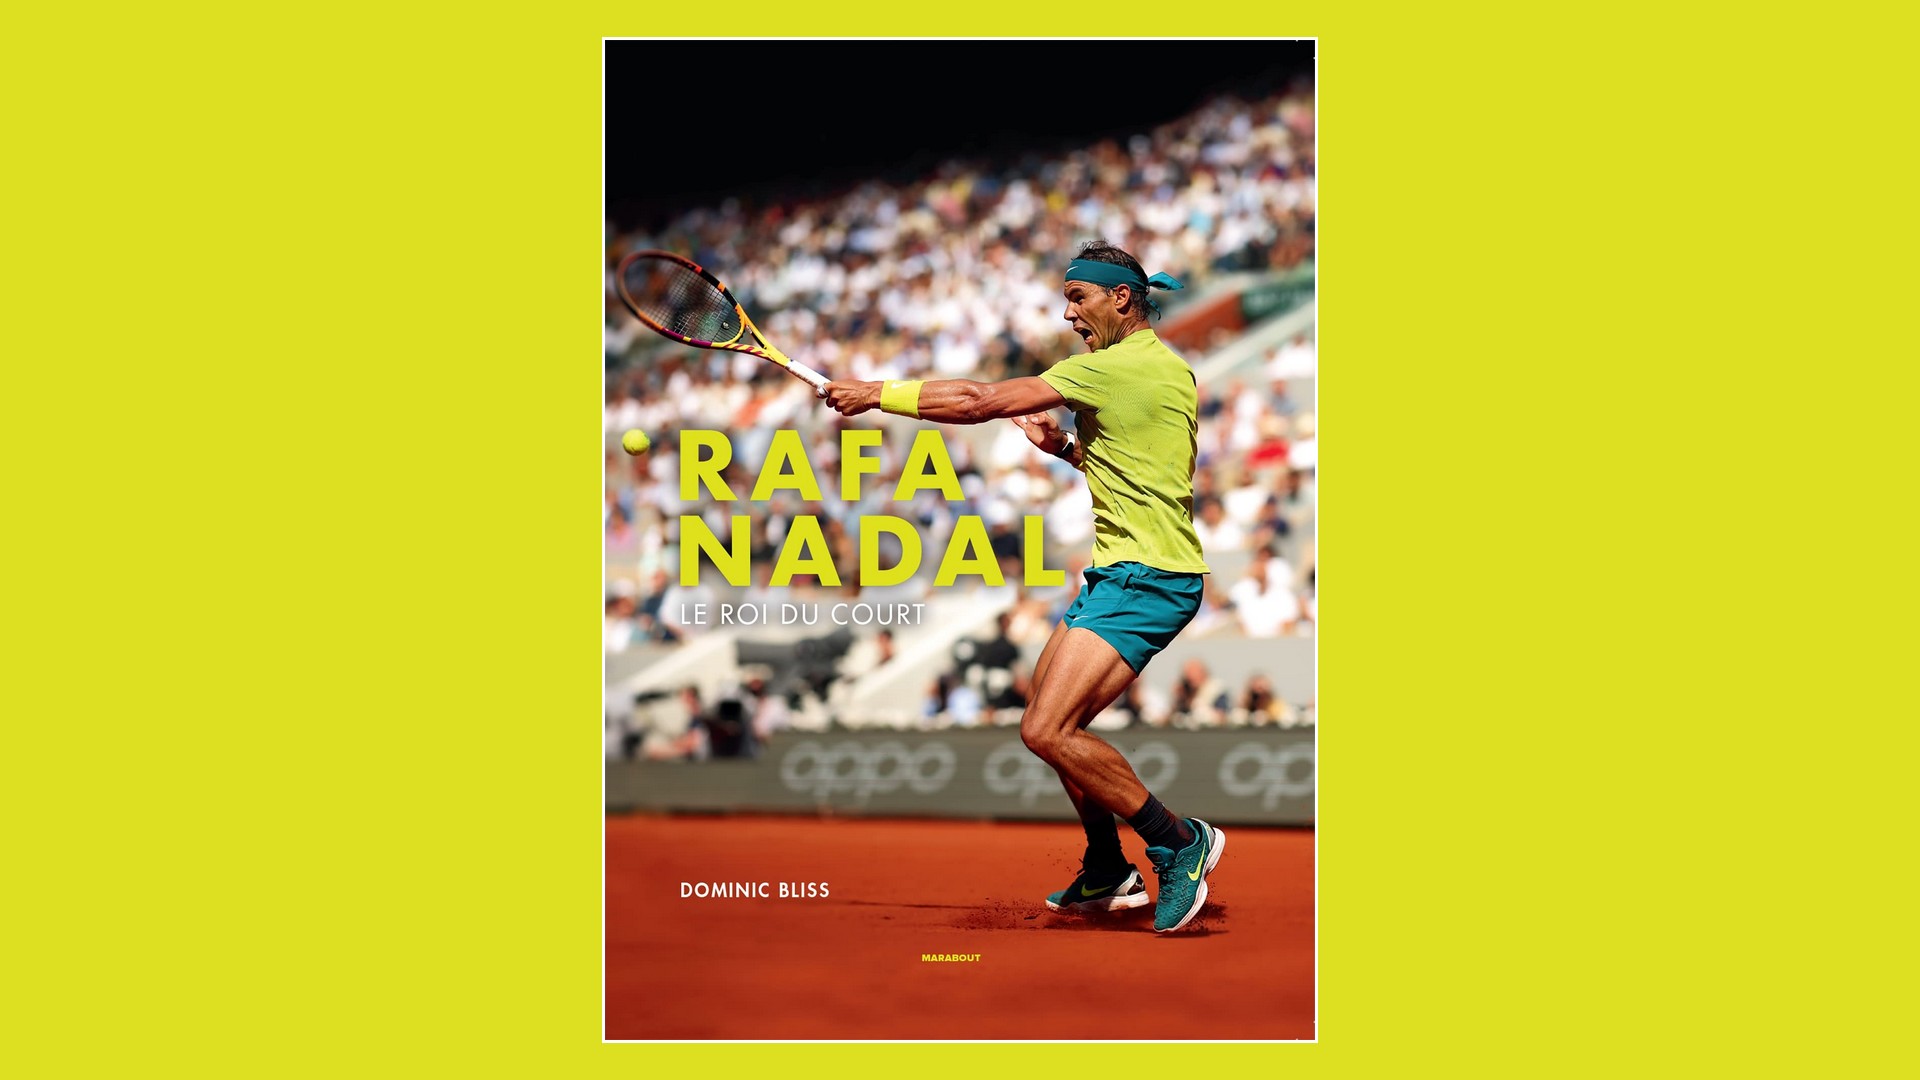 https://sportbusiness.club/wp-content/uploads/2022/11/Livre-Rafael-Nadal-le-roi-du-court-Dominic-Bliss-2022.jpg